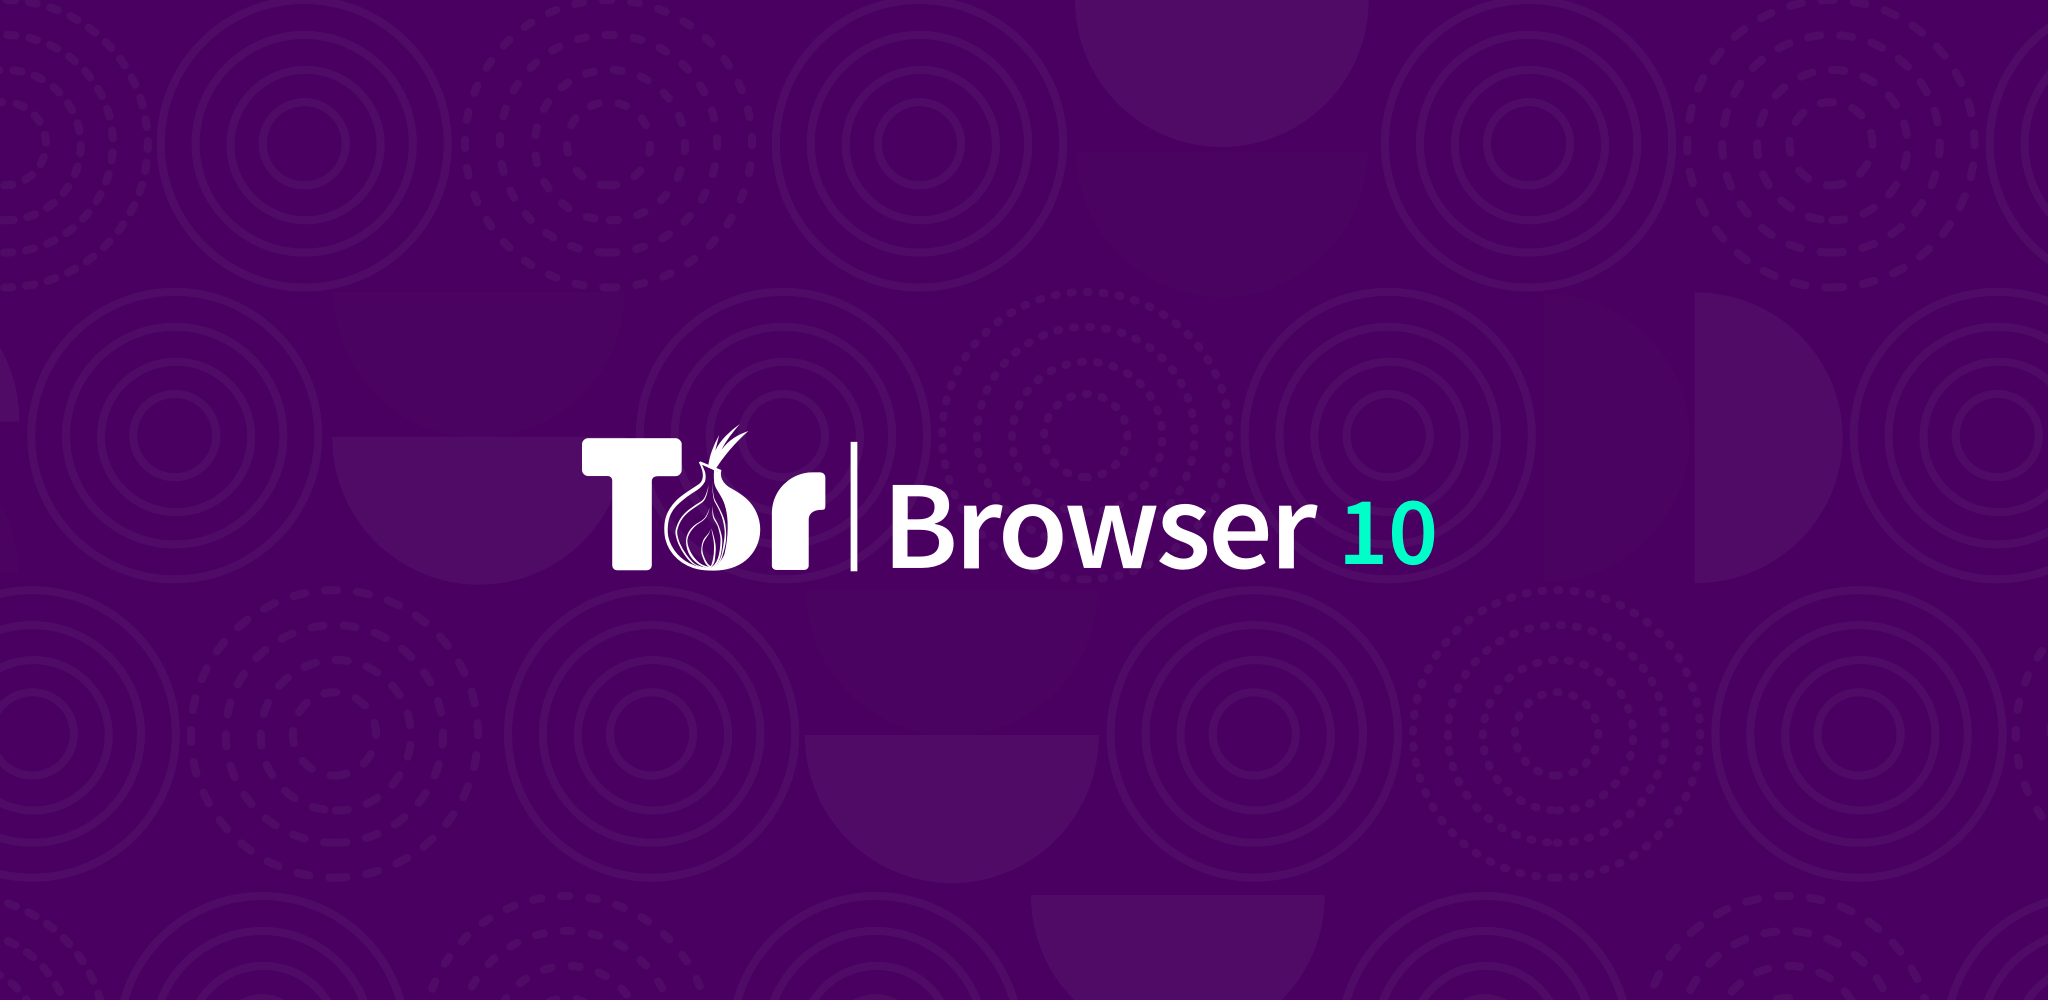 Tor browser bundle для андроид gydra тор браузер пират hudra